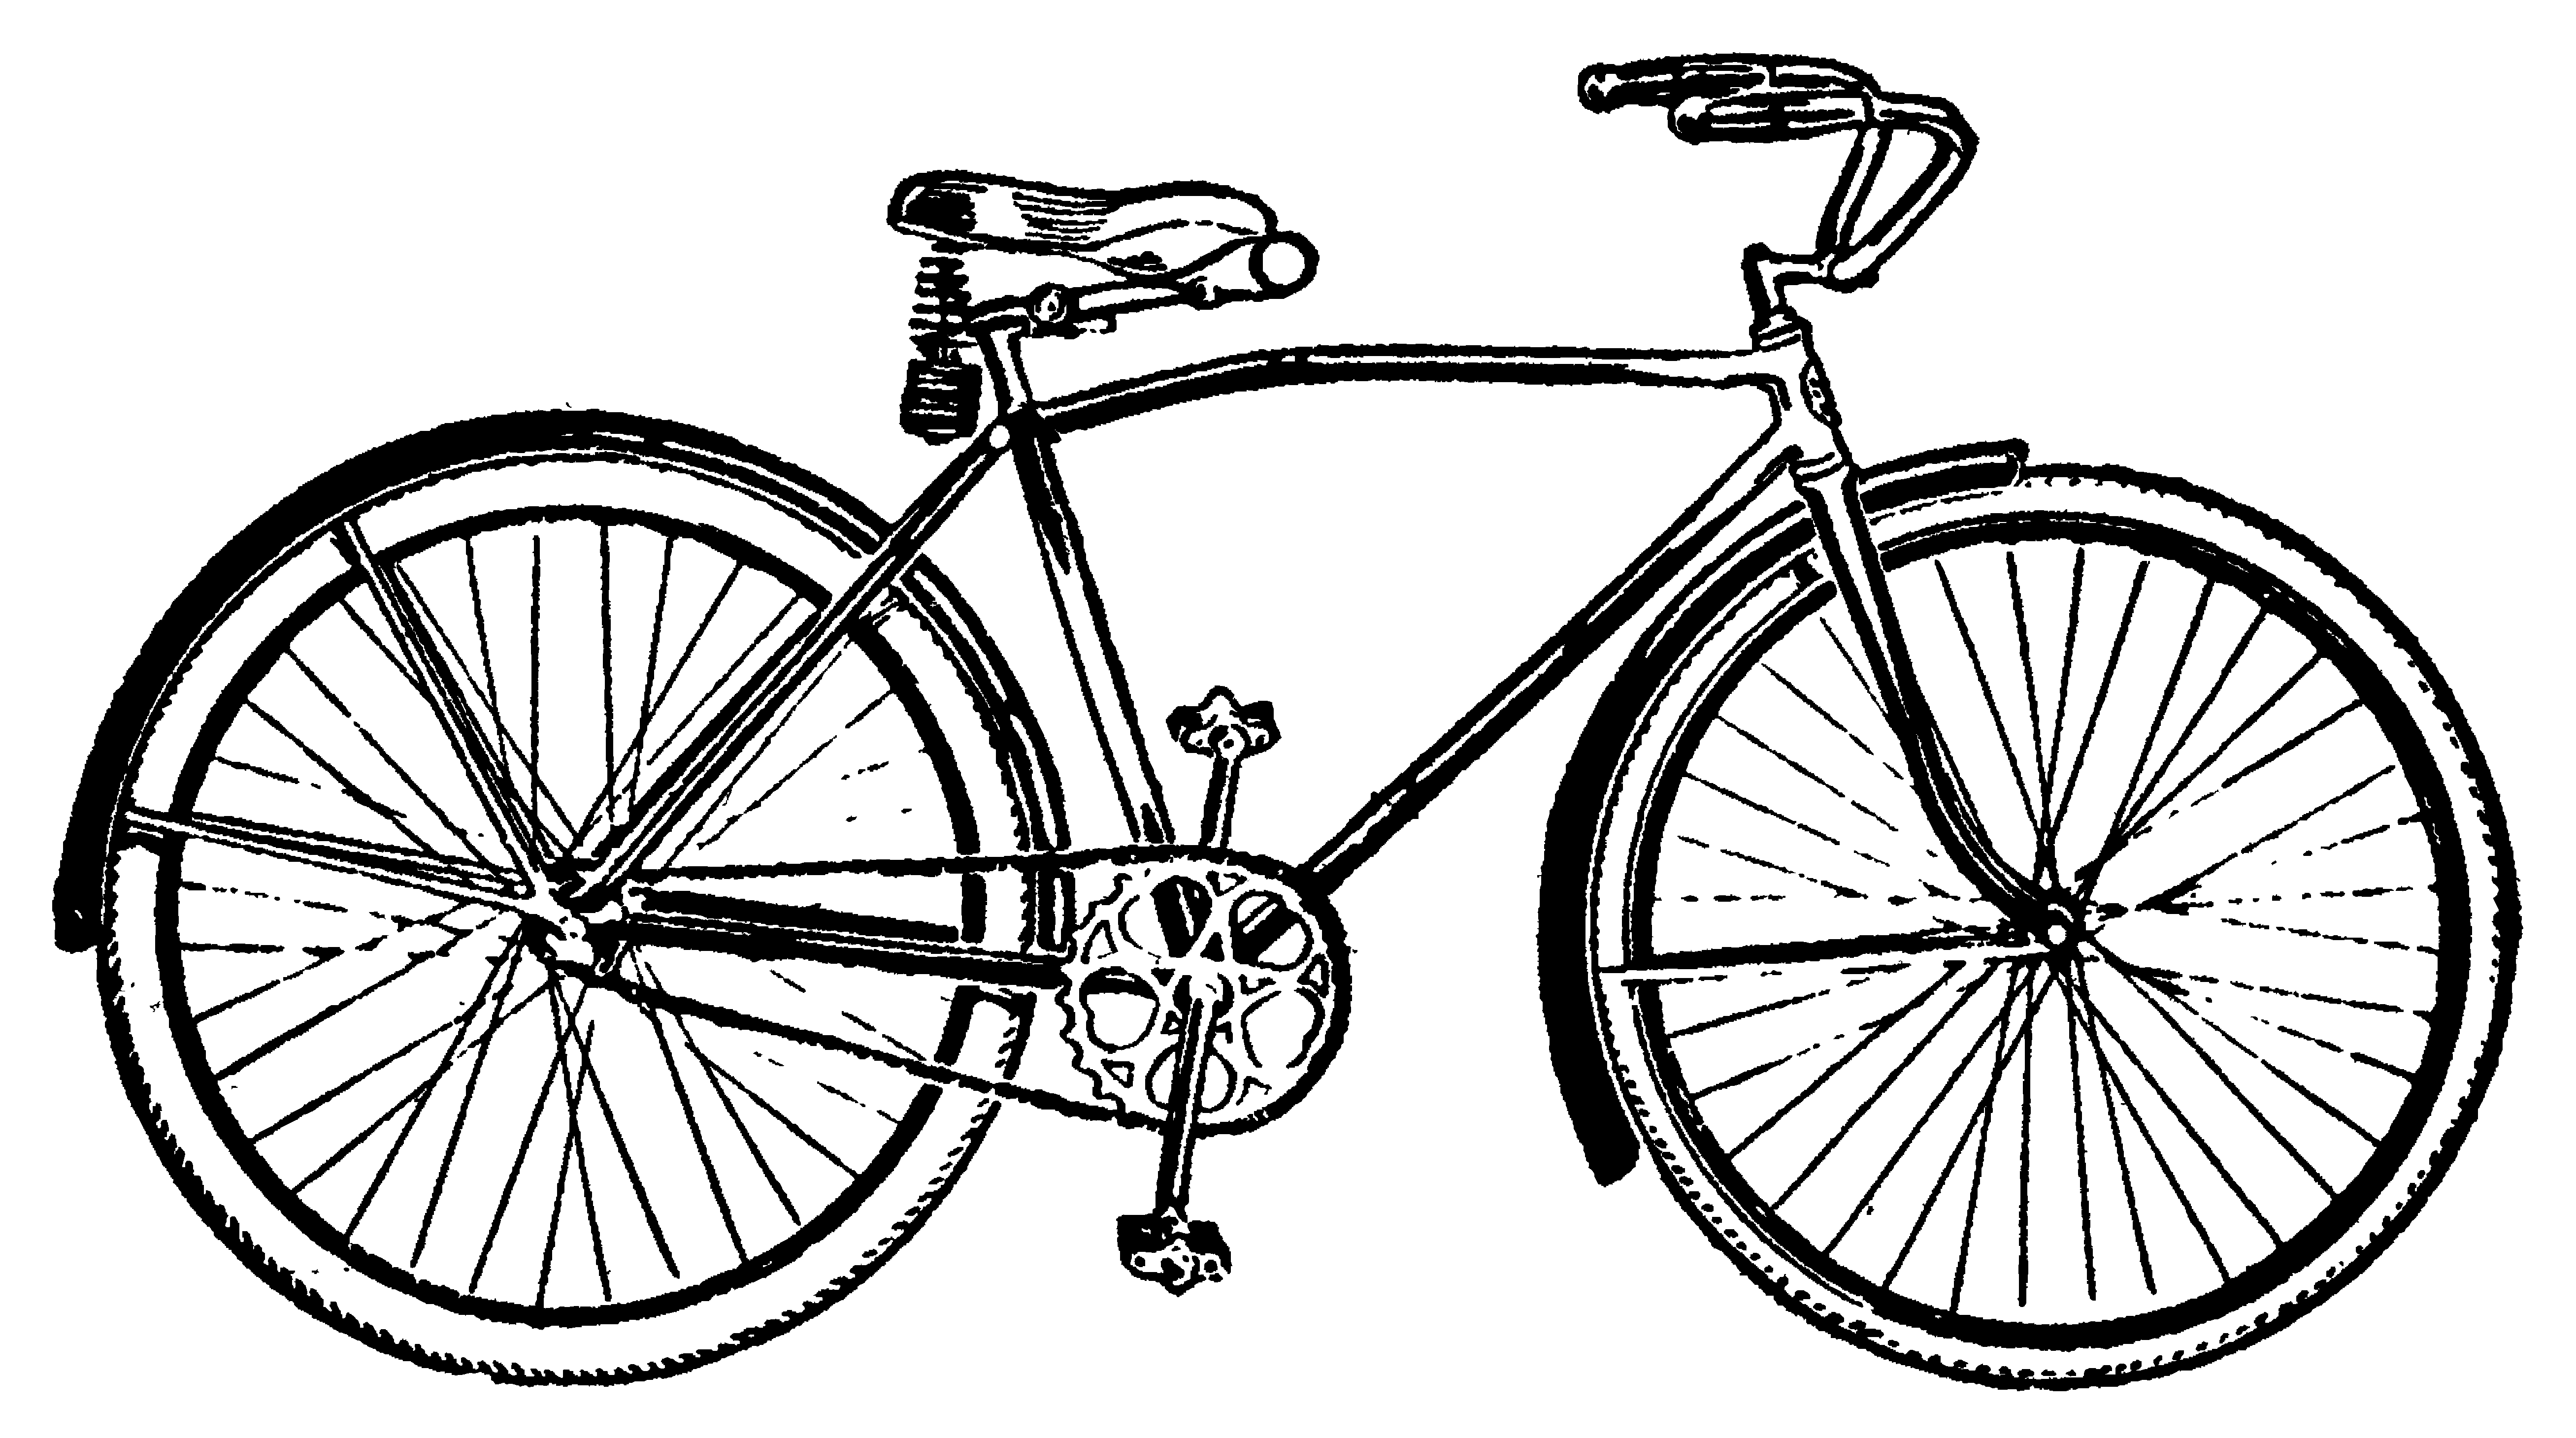 Bike clipart: Bike vintage bicycle clip art